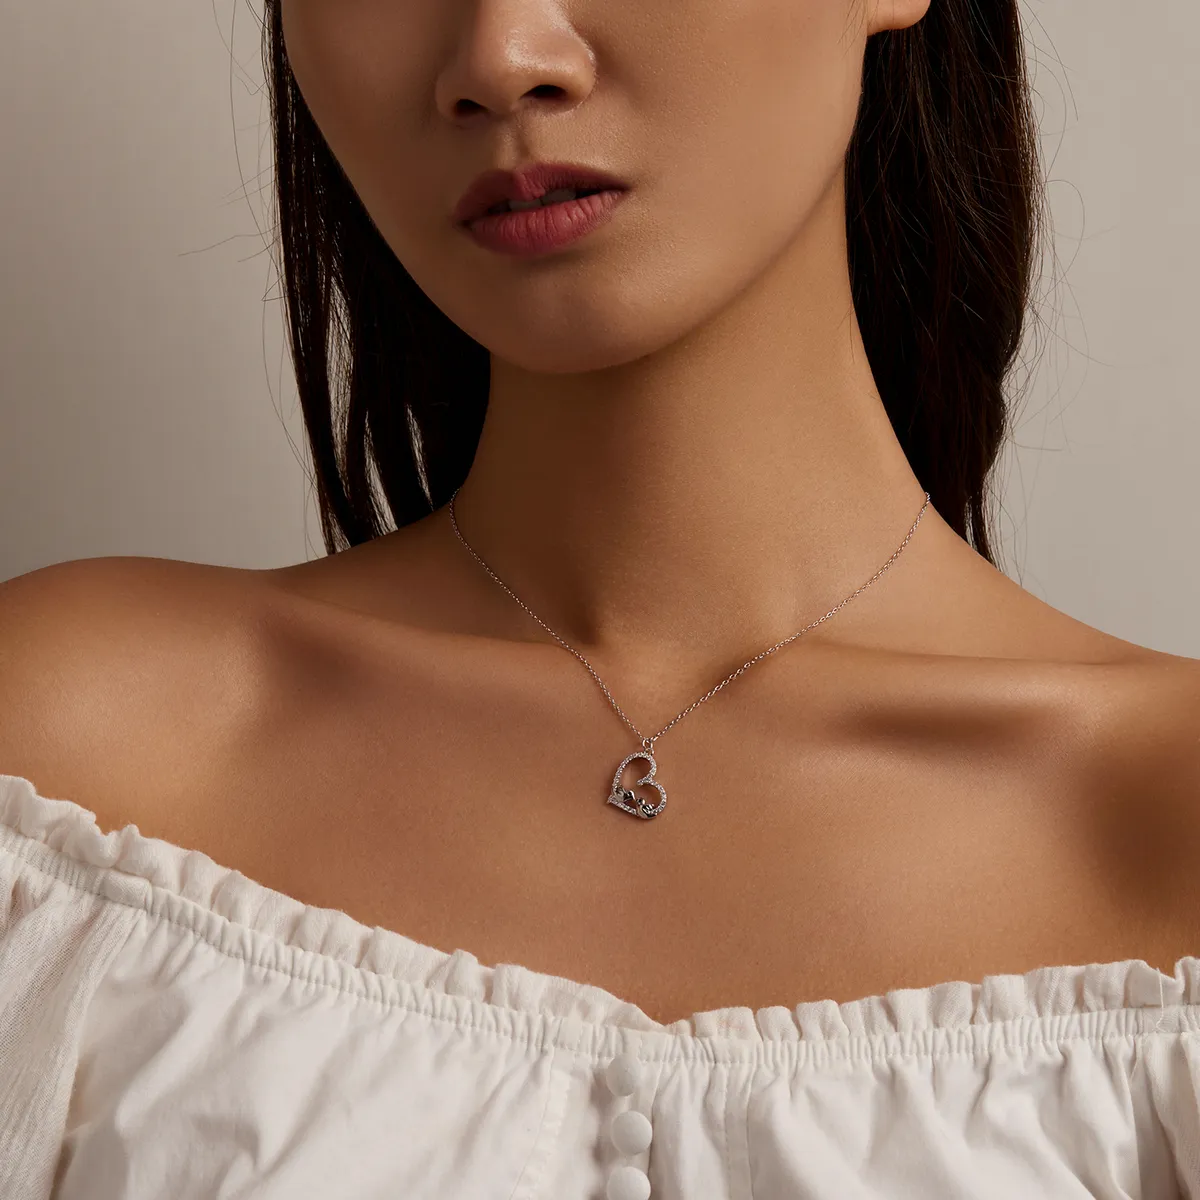 Pandora Style Love Bird Necklace - BSN237